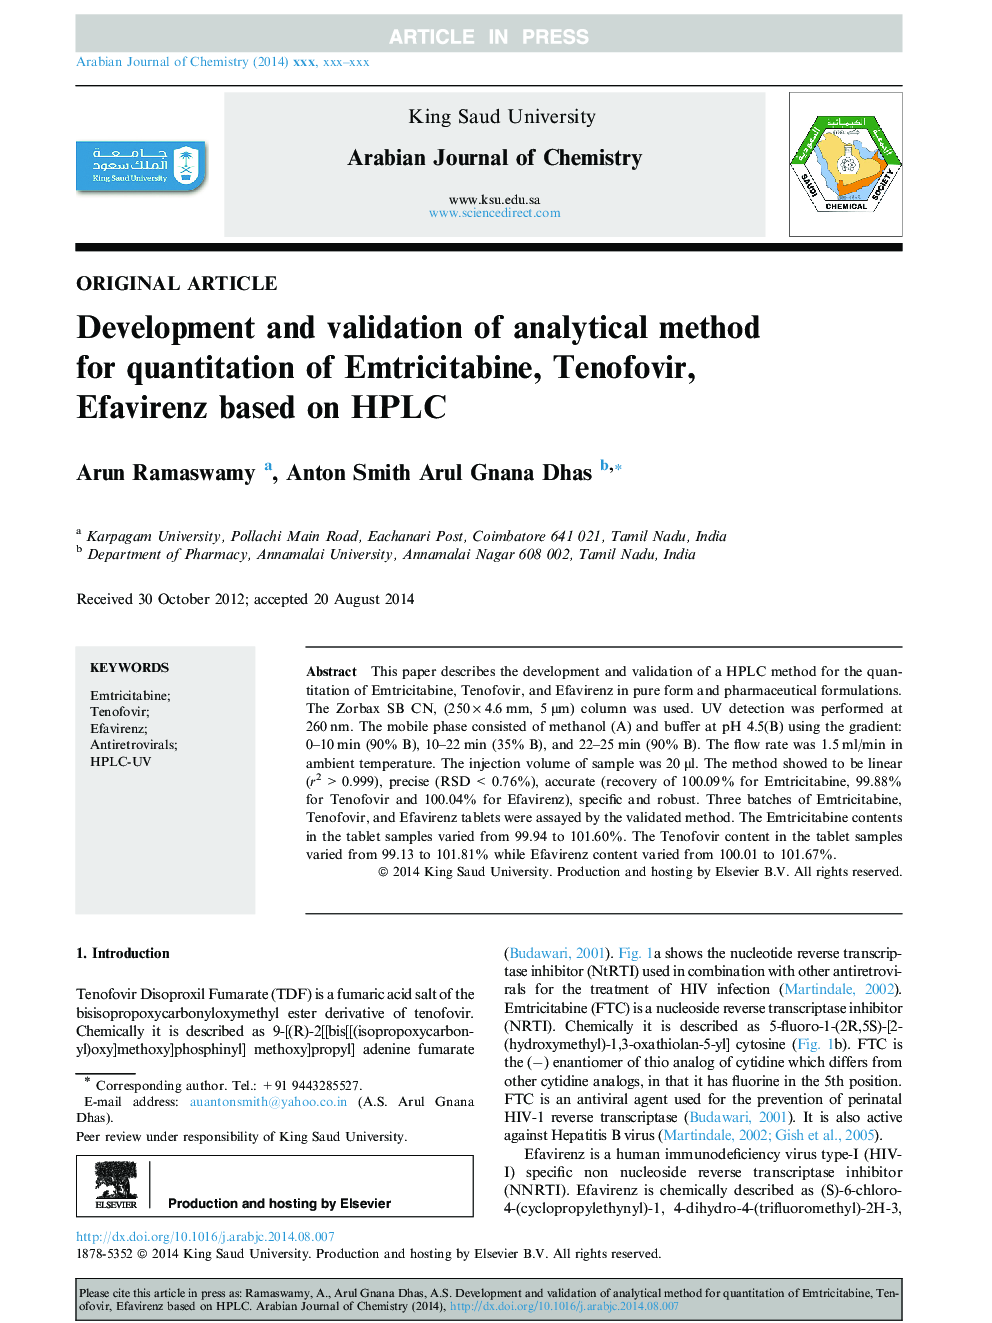 Development and validation of analytical method for quantitation of Emtricitabine, Tenofovir, Efavirenz based on HPLC